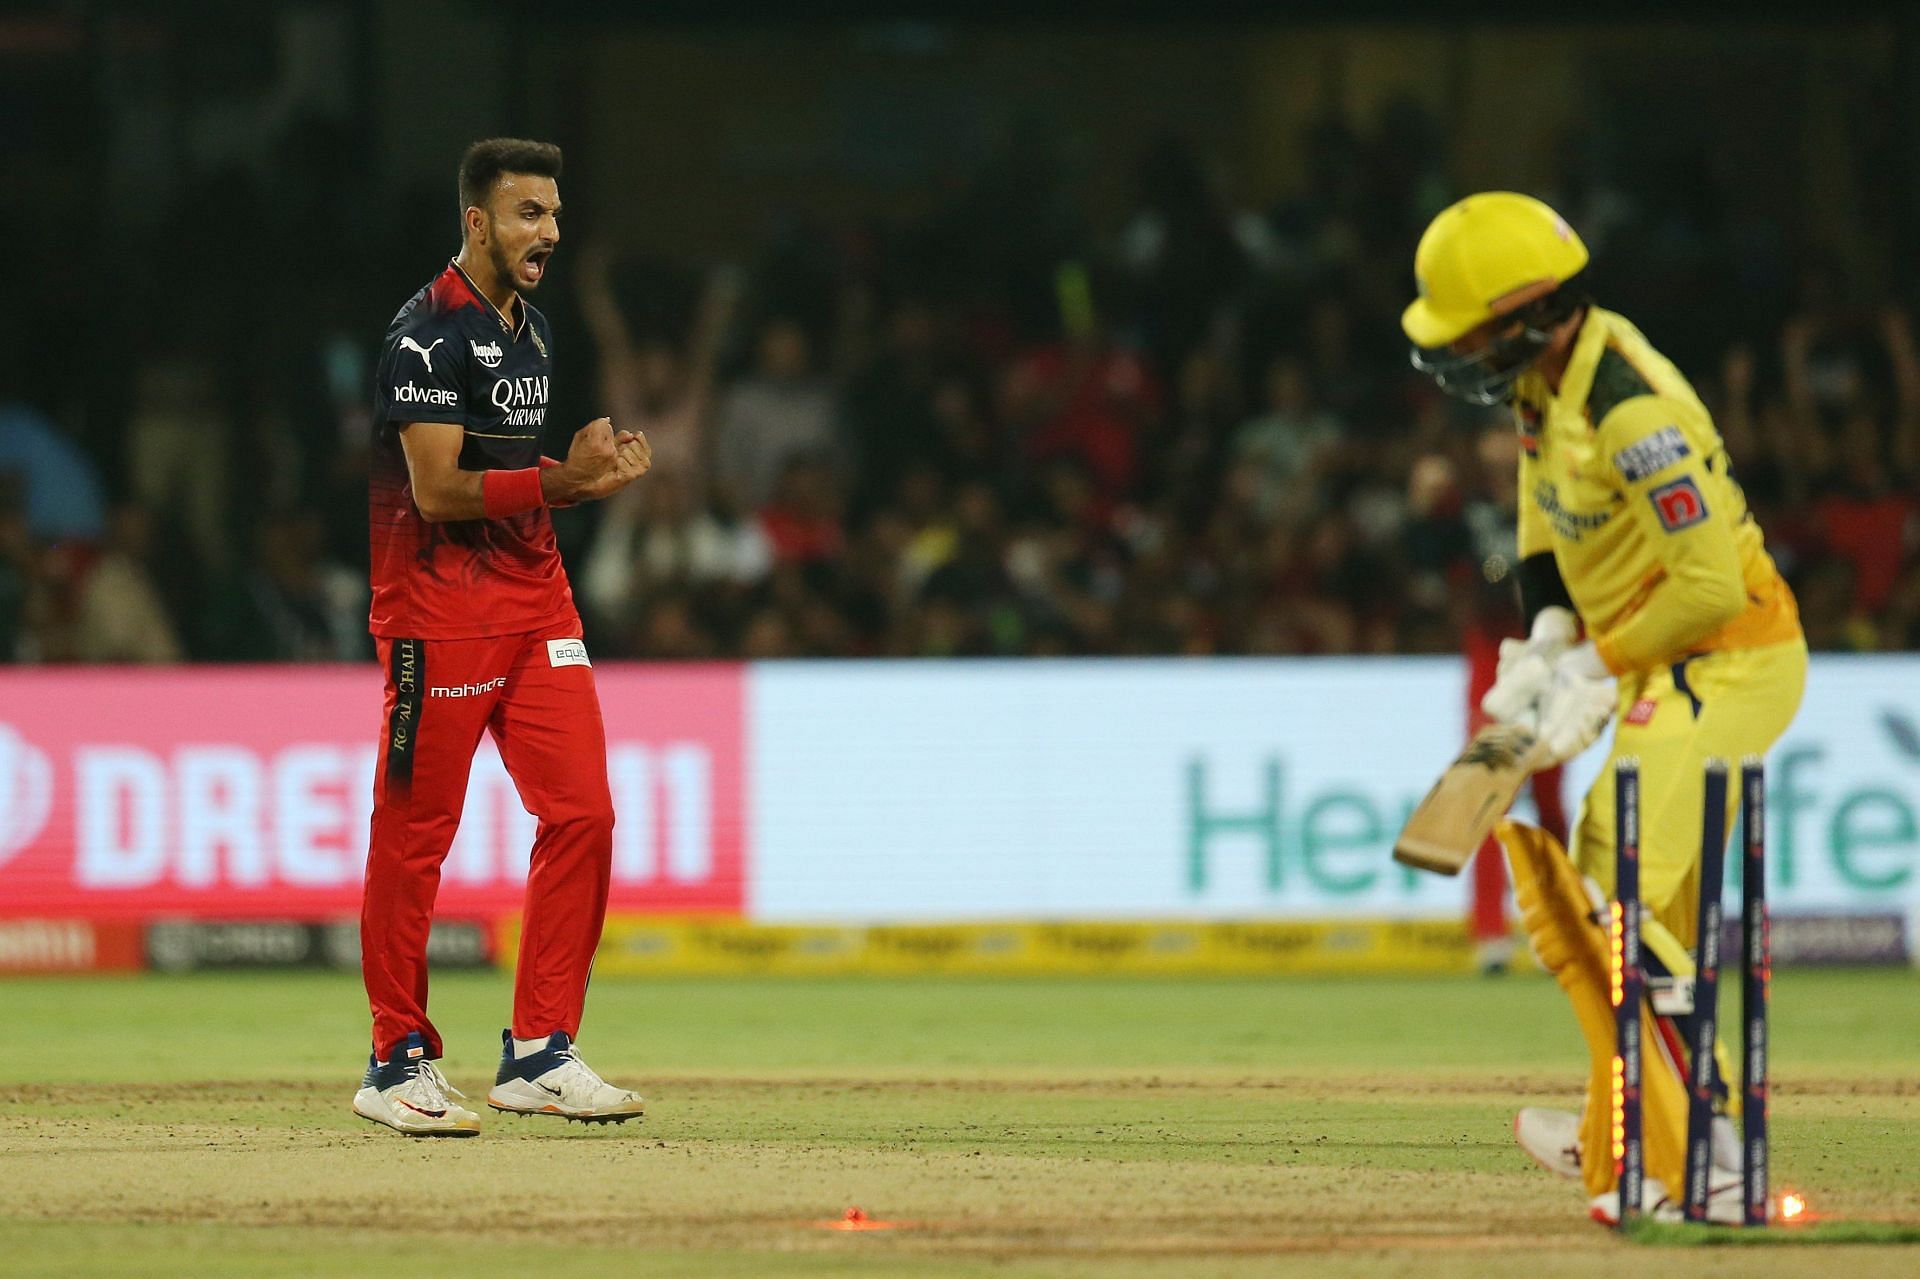 Harshal Patel celebrates the wicket. (Image Credits: Twitter)